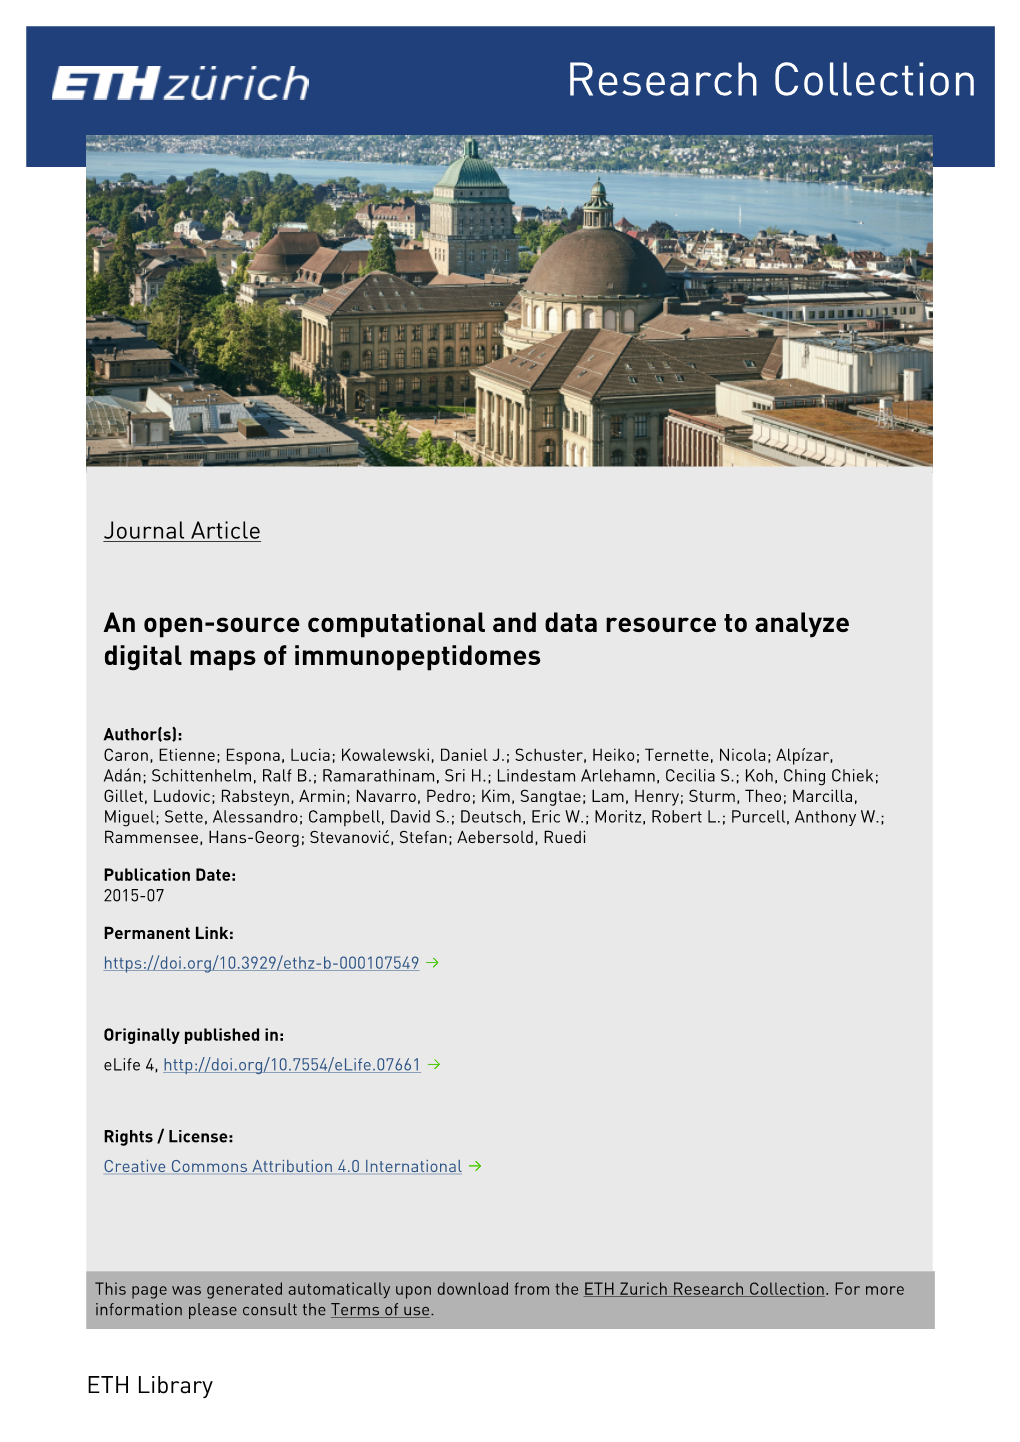 An Open-Source Computational and Data Resource to Analyze Digital Maps of Immunopeptidomes